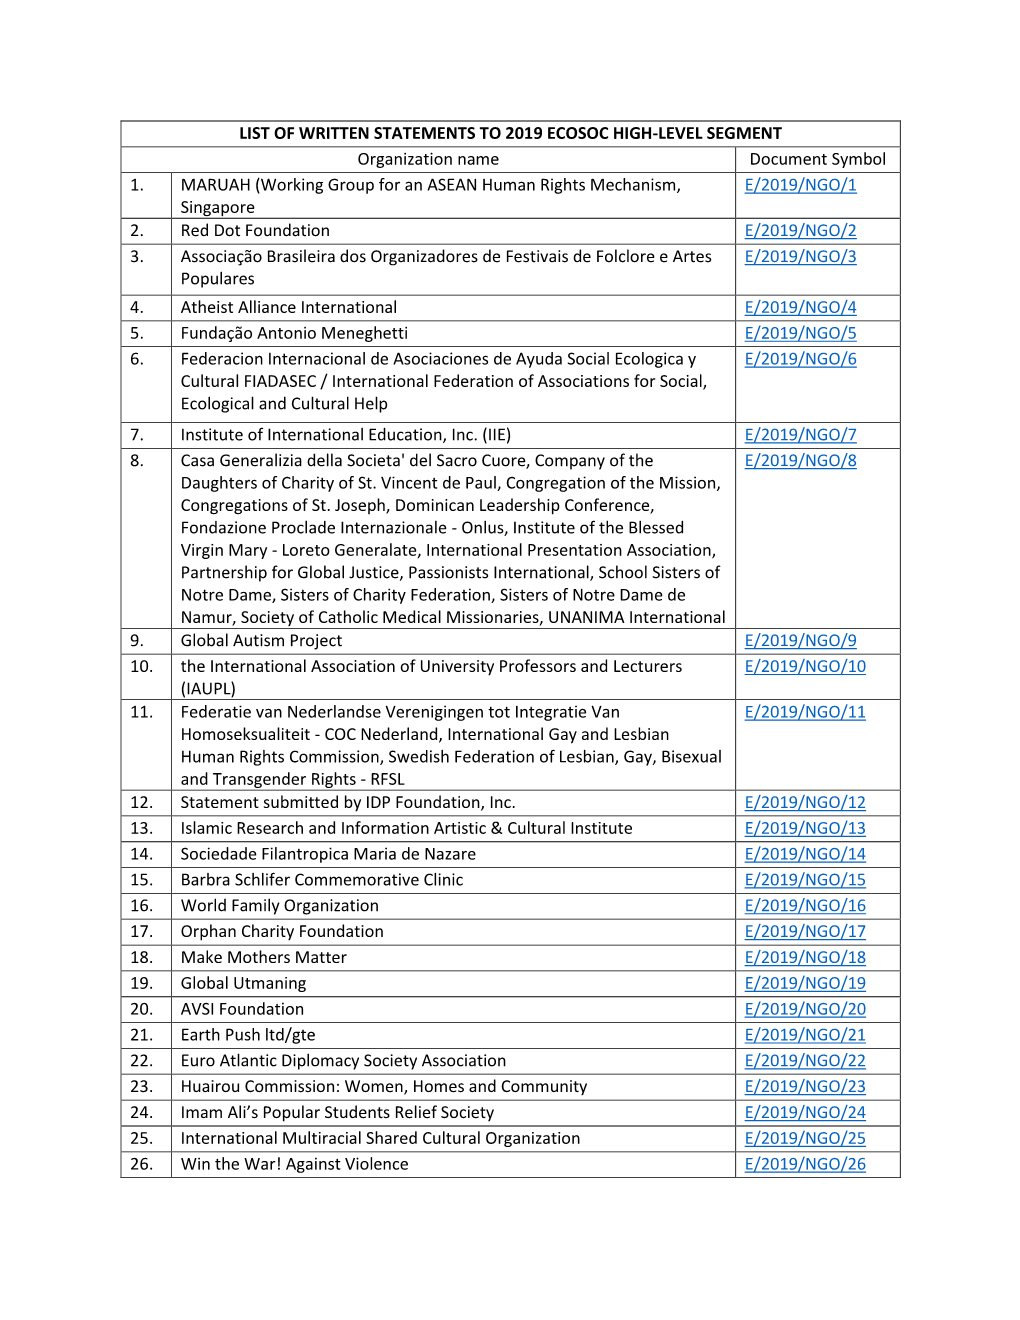 LIST of WRITTEN STATEMENTS to 2019 ECOSOC HIGH-LEVEL SEGMENT Organization Name Document Symbol 1